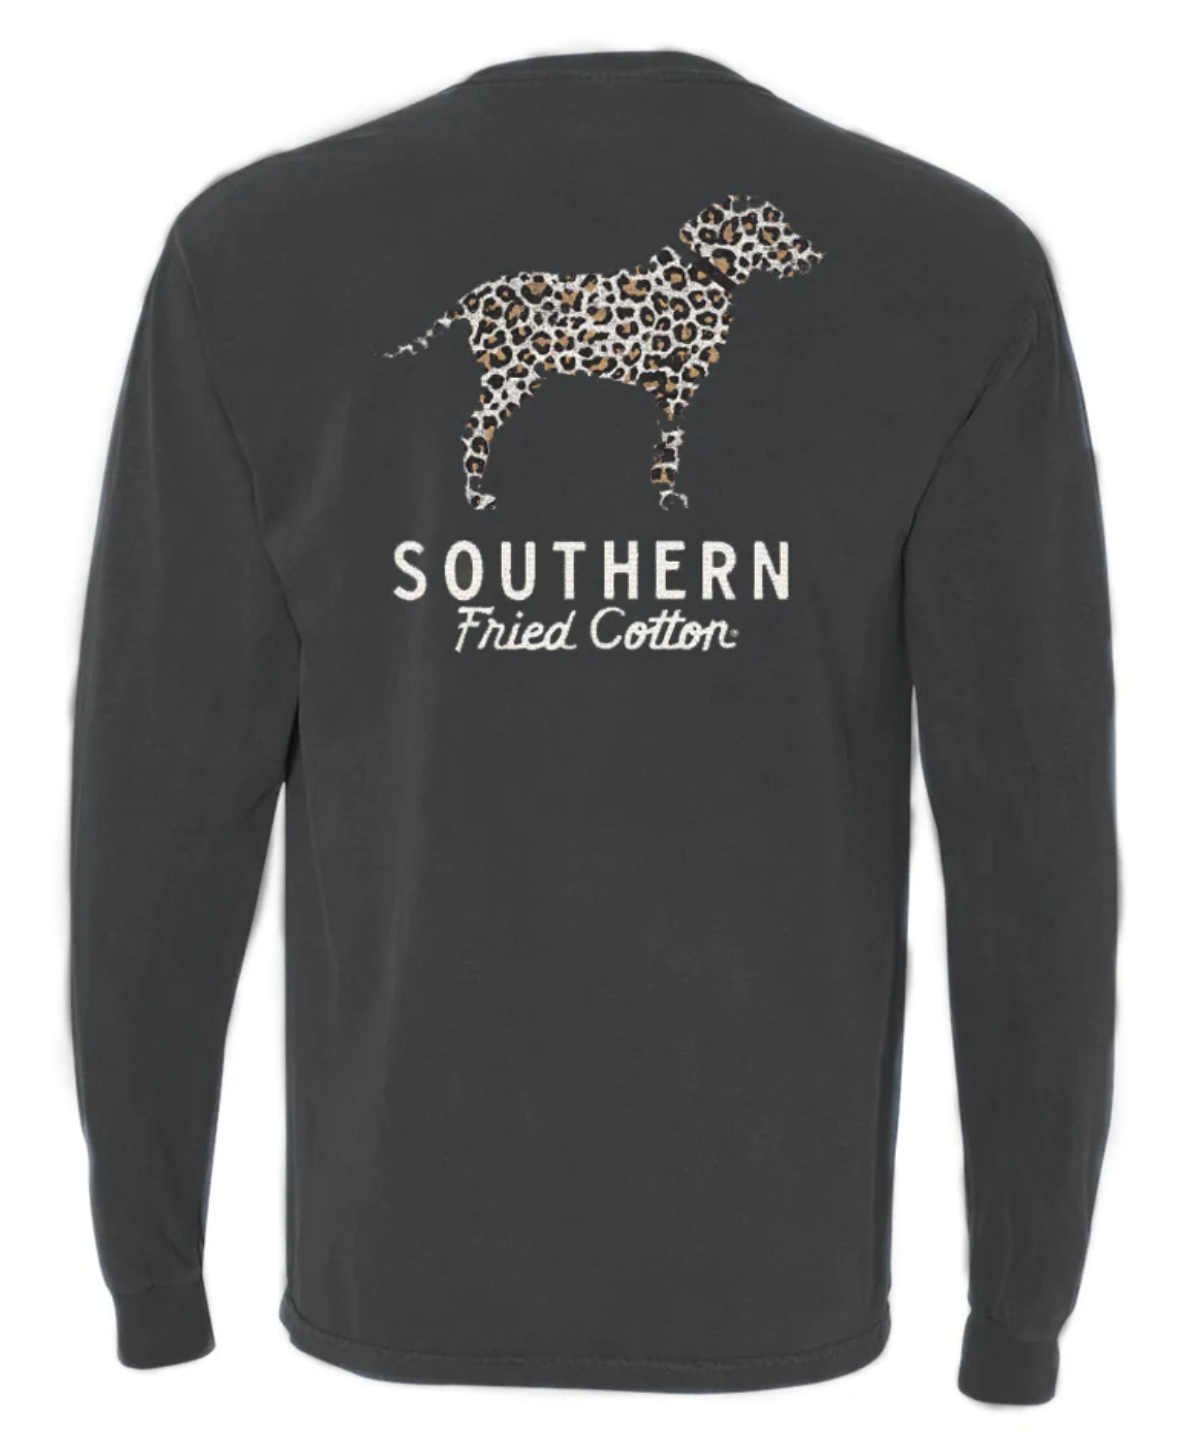 Southern Fried Cotton Cheetah Hound Long Sleeve T-Shirt